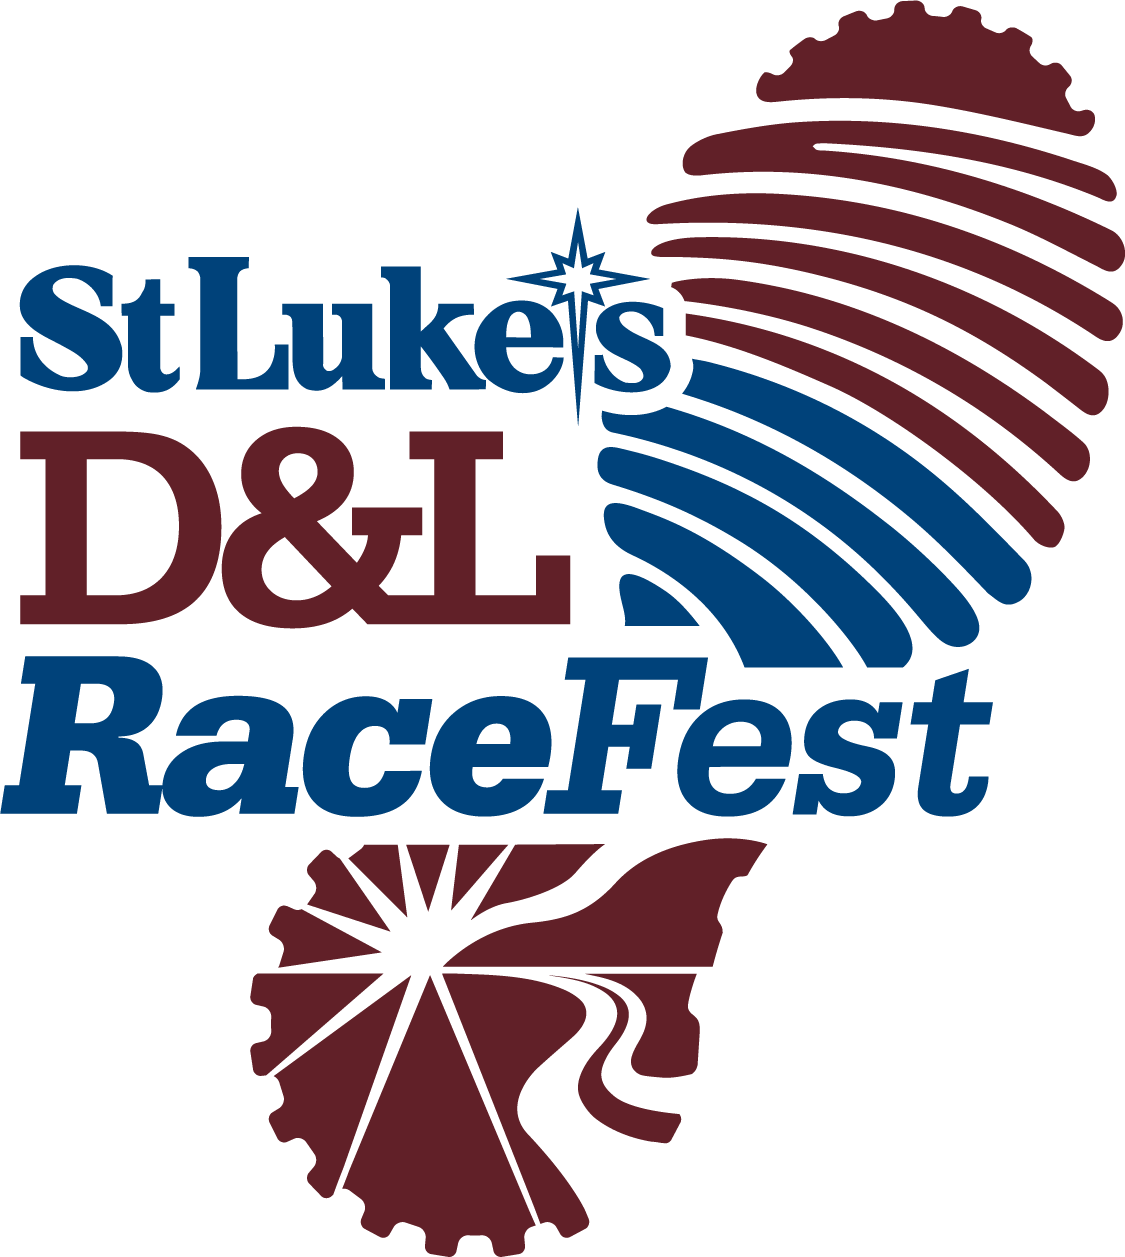 St. Luke's D&L RaceFest